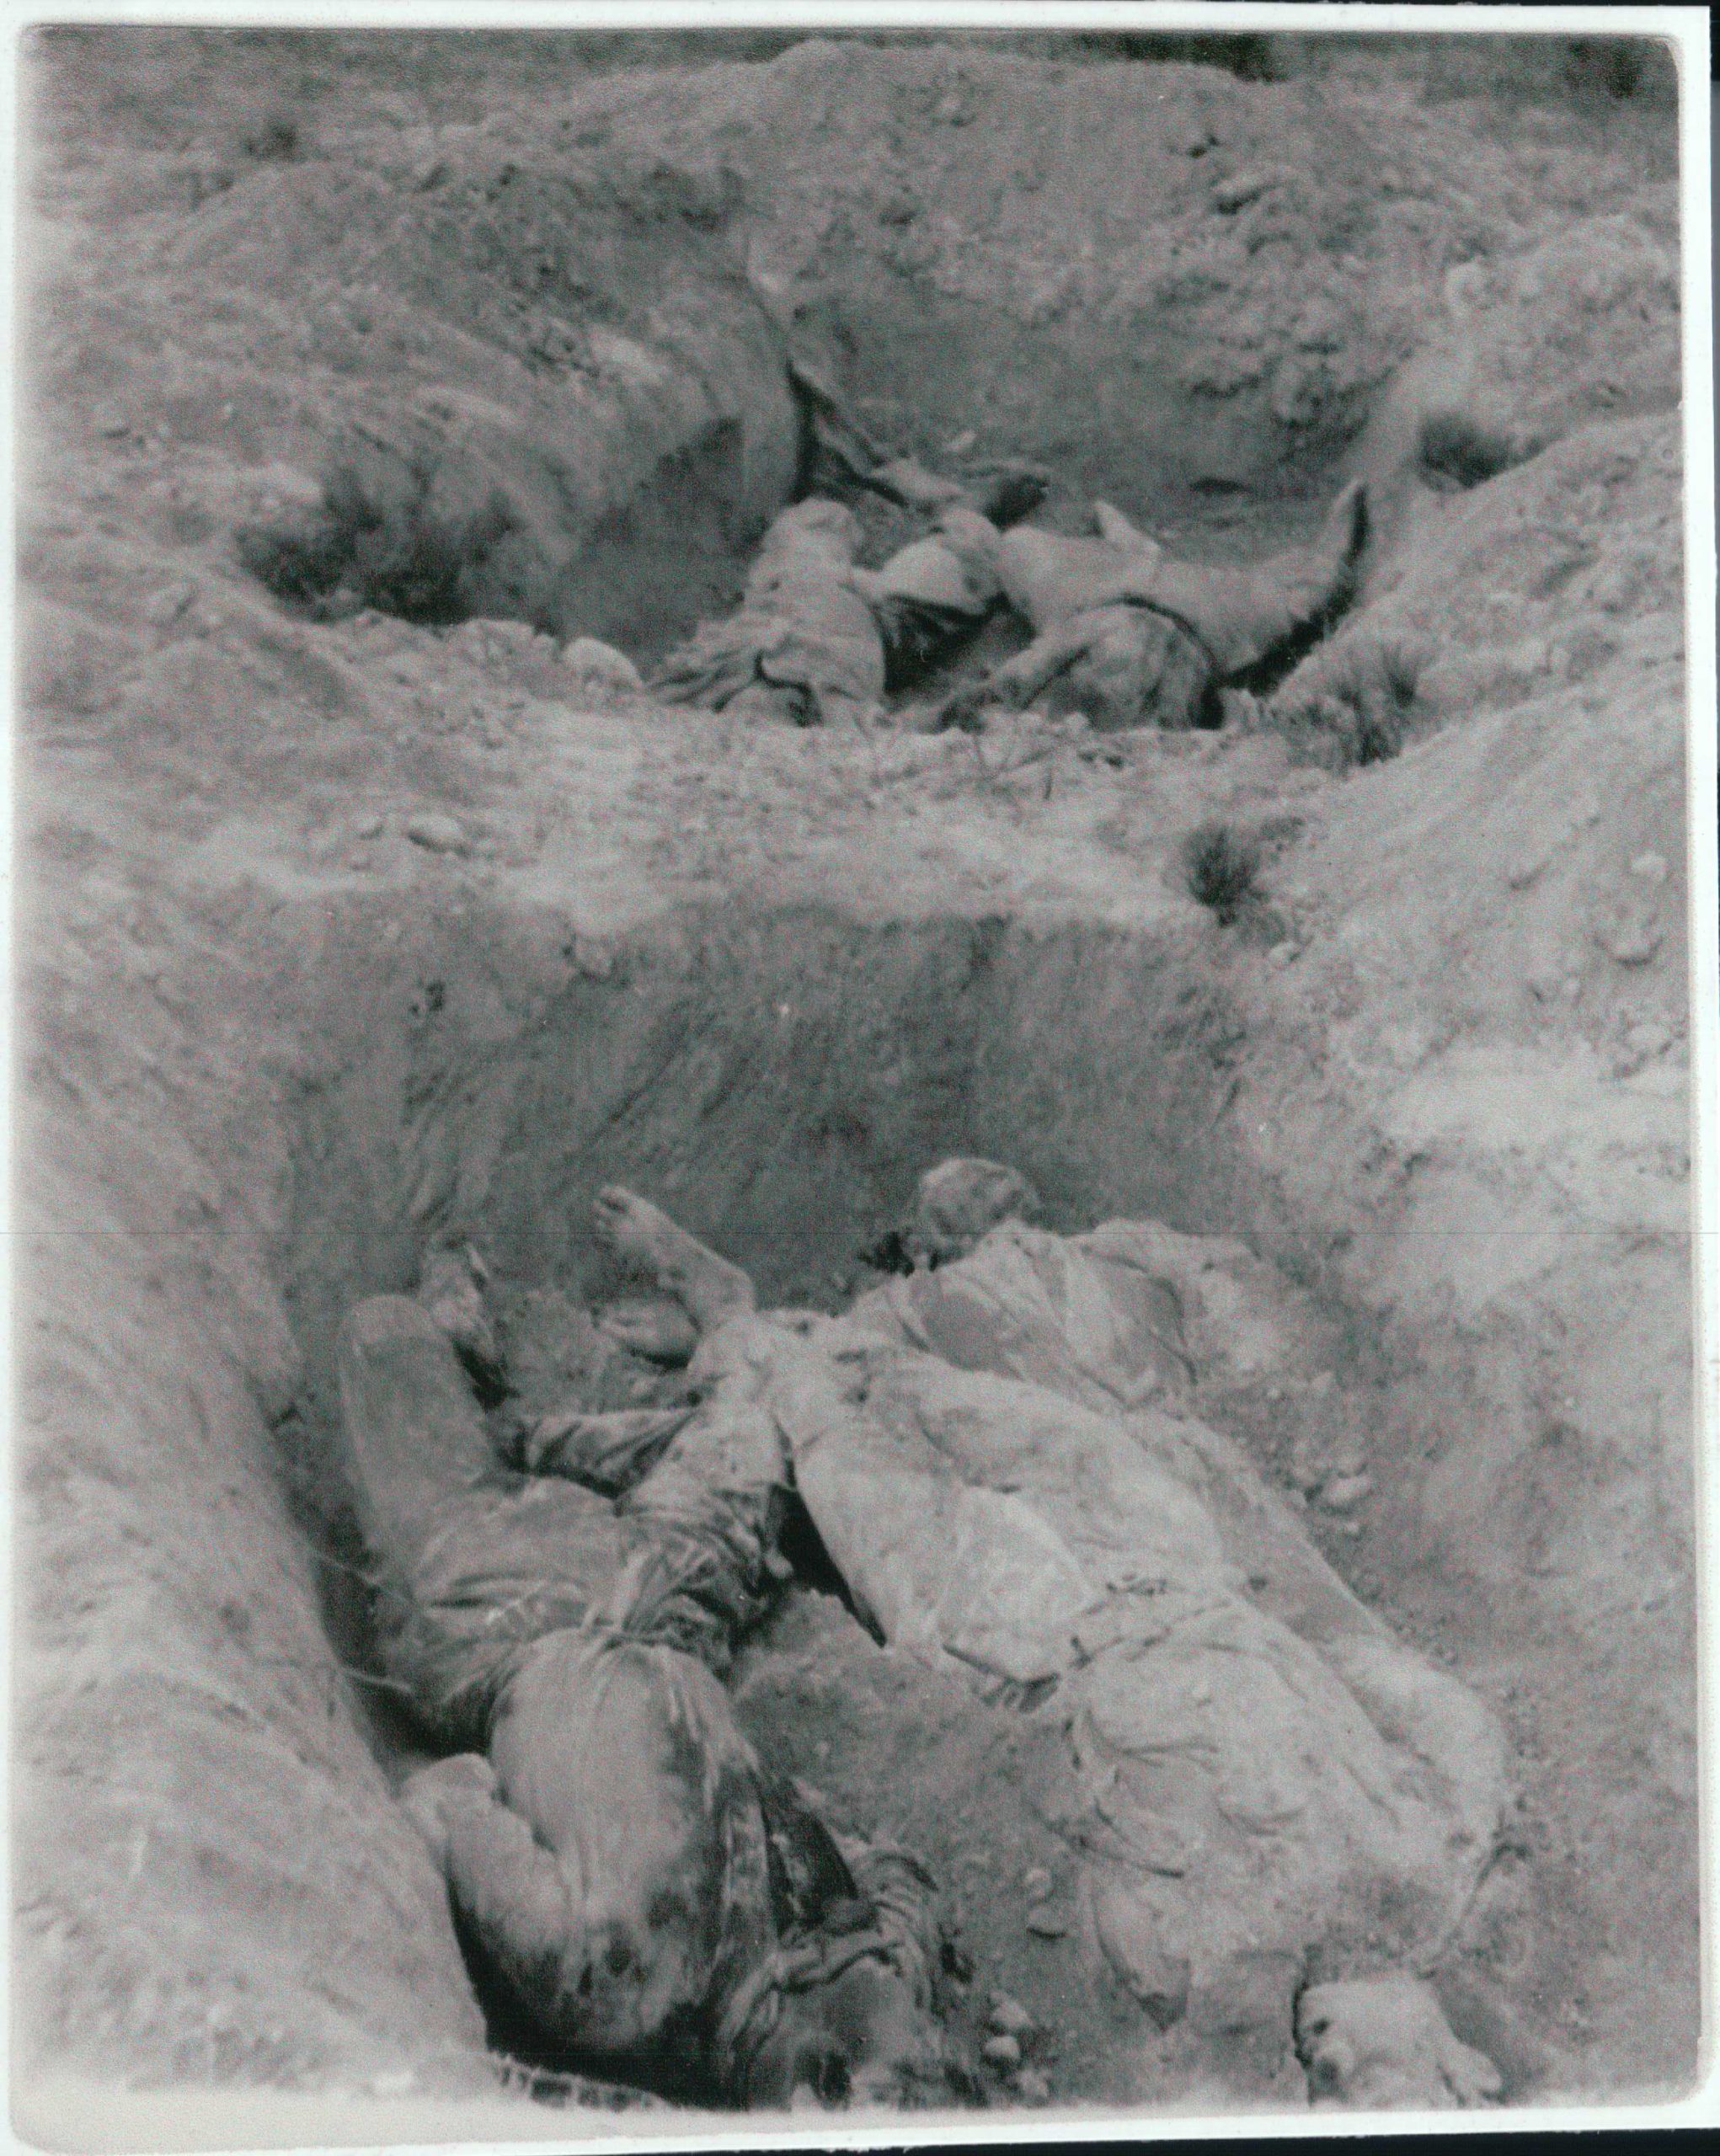 Burial of South Koreans